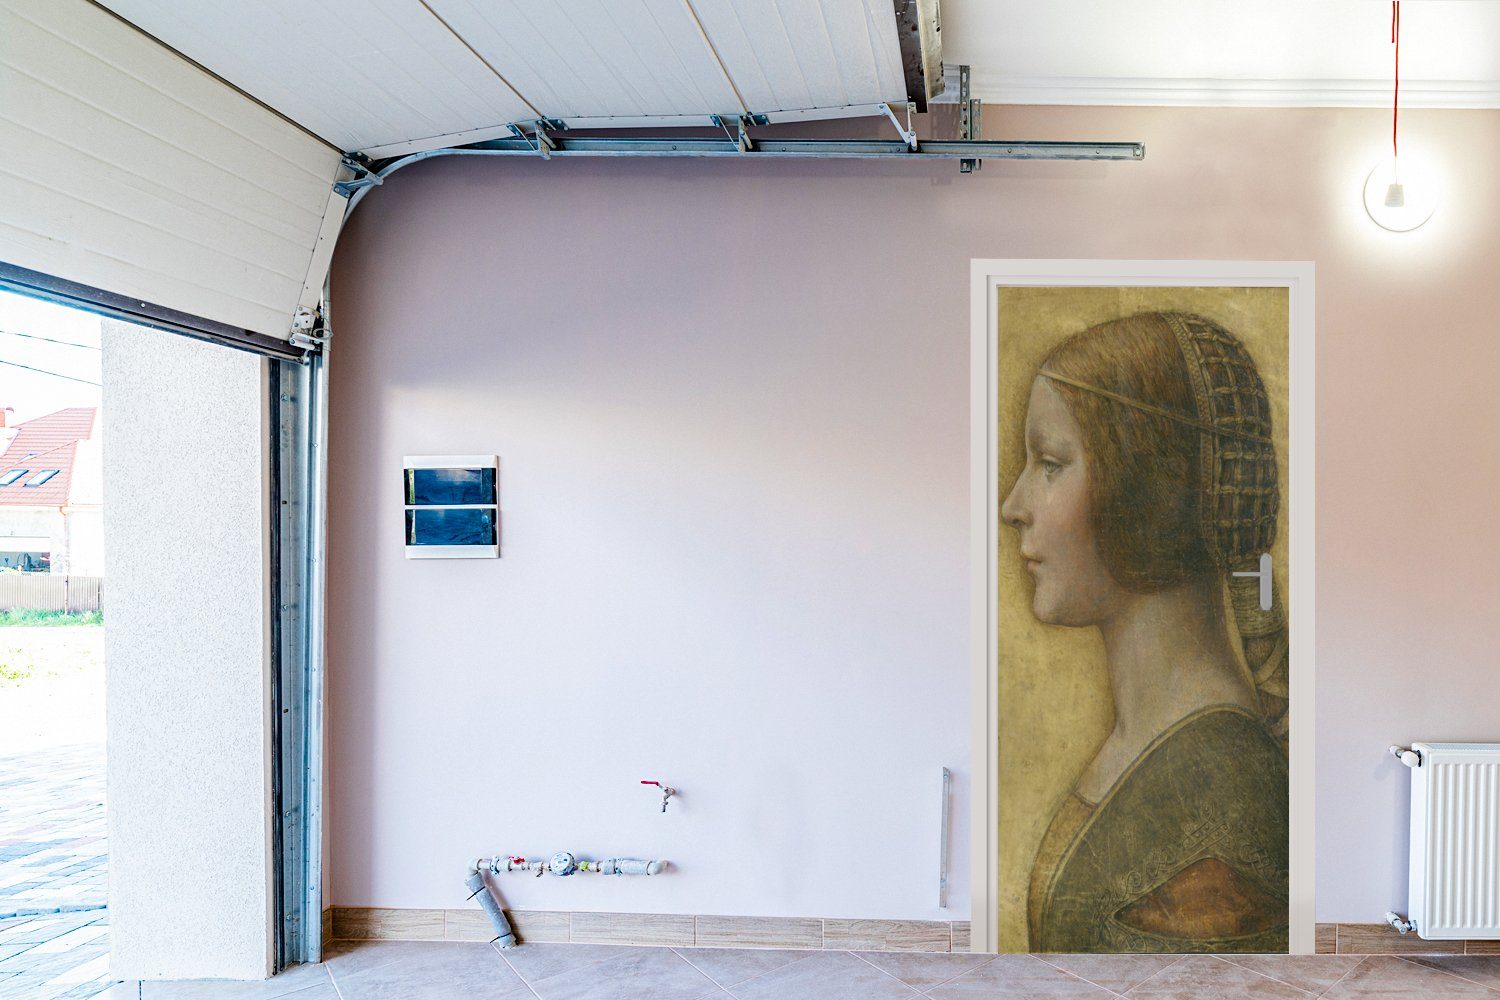 MuchoWow Türtapete La bedruckt, cm Bella - 75x205 Tür, Vinci, St), da Fototapete Türaufkleber, Principessa (1 für Leonardo Matt